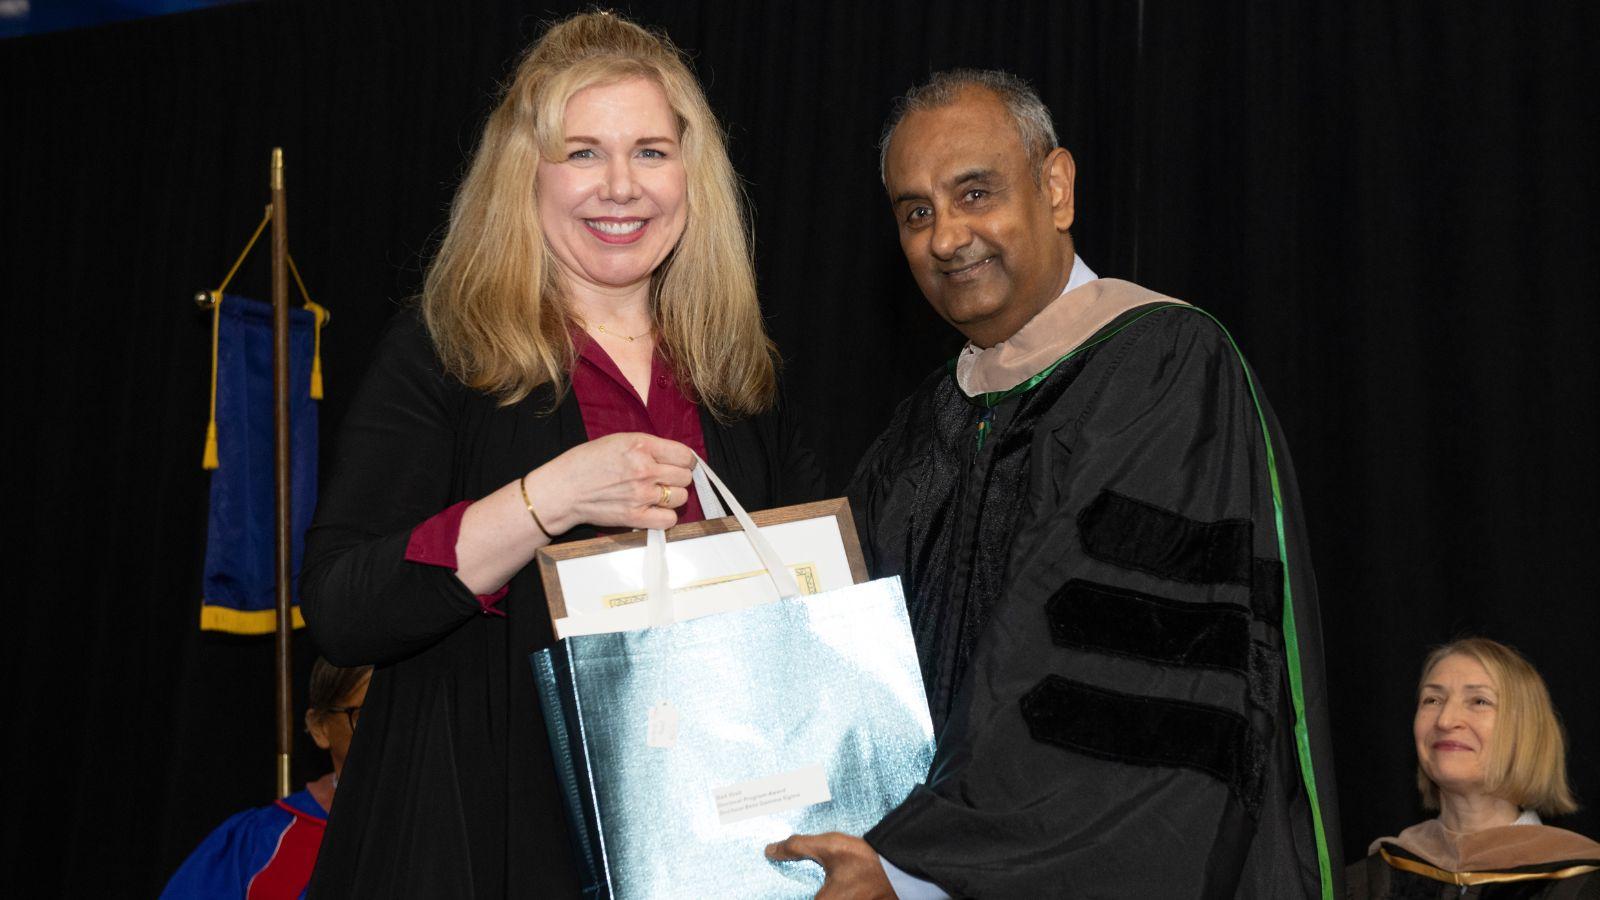 Dr. Pradeep Gopalakrishna with Gail Yosh, recipient of the Doctoral Program Award.